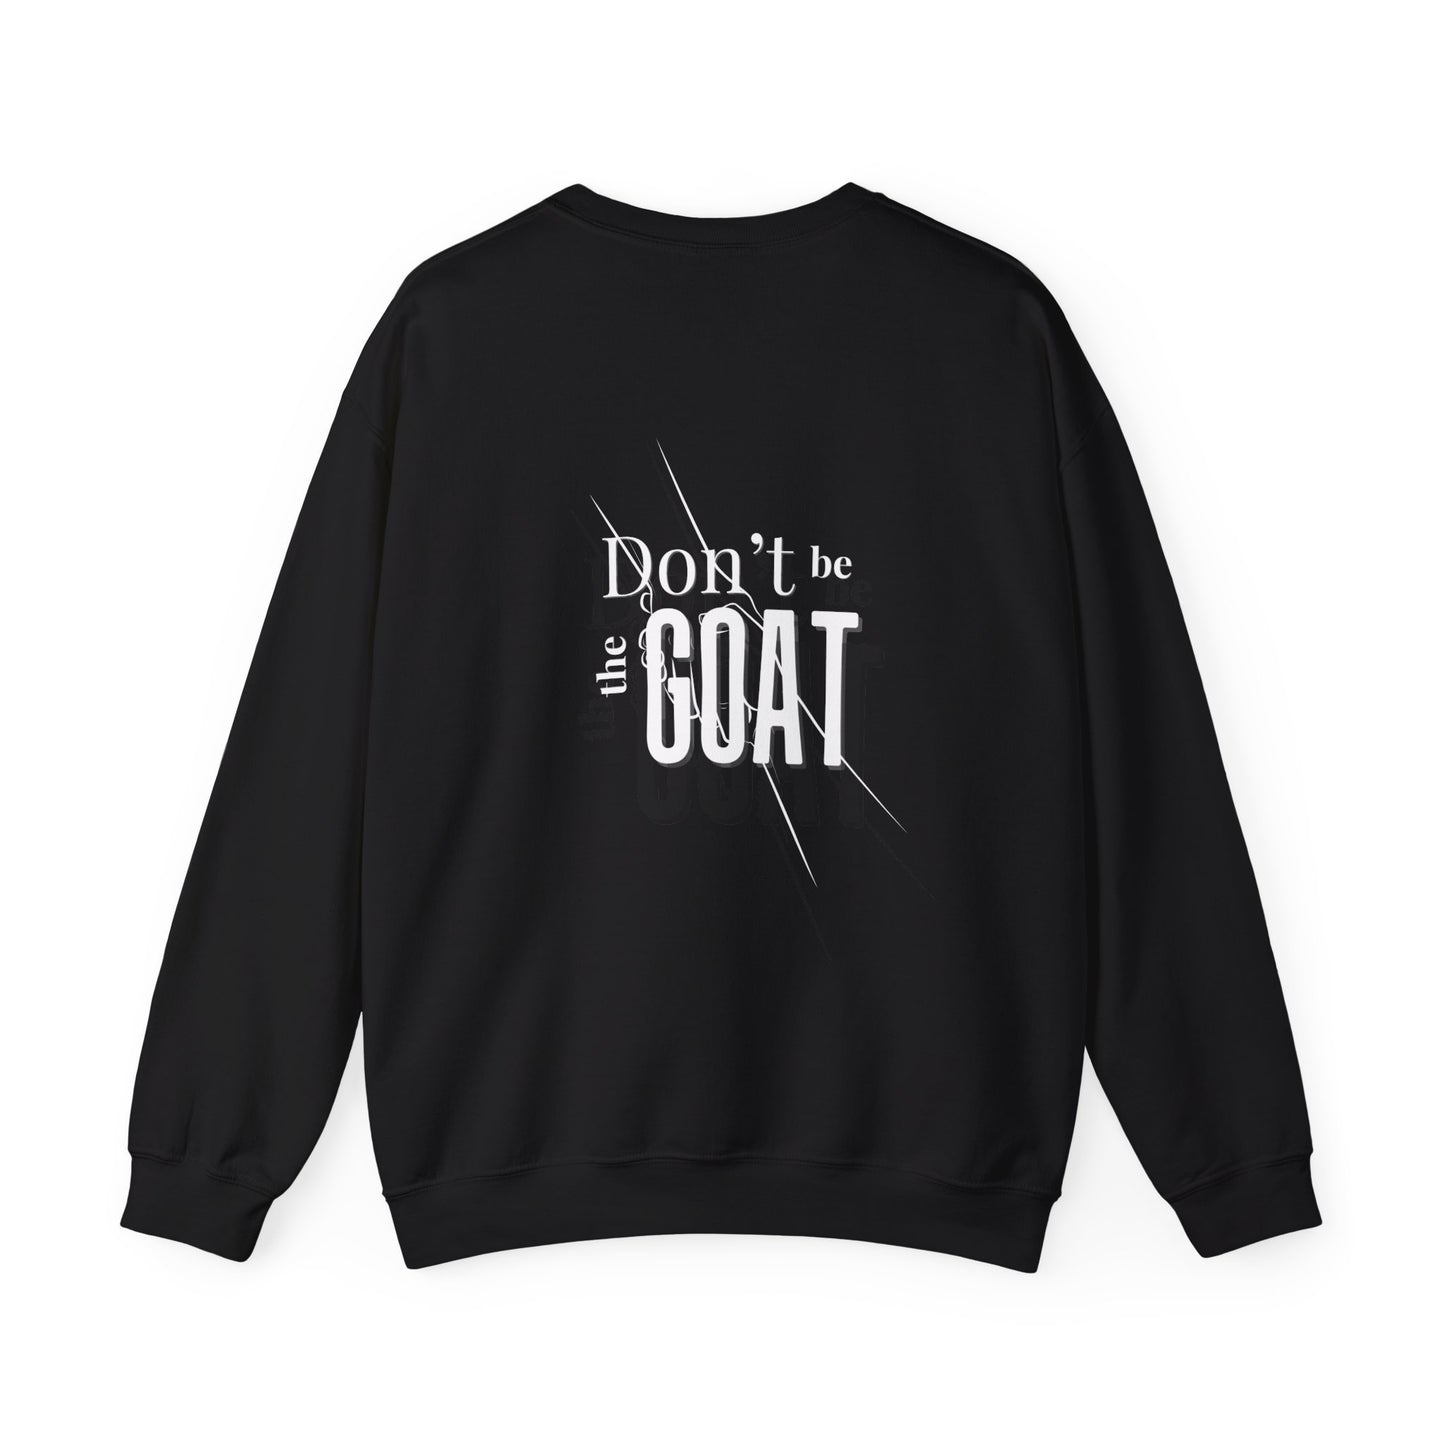 Don't be the Goat Pt. 2 Crew Neck Sweatshirt